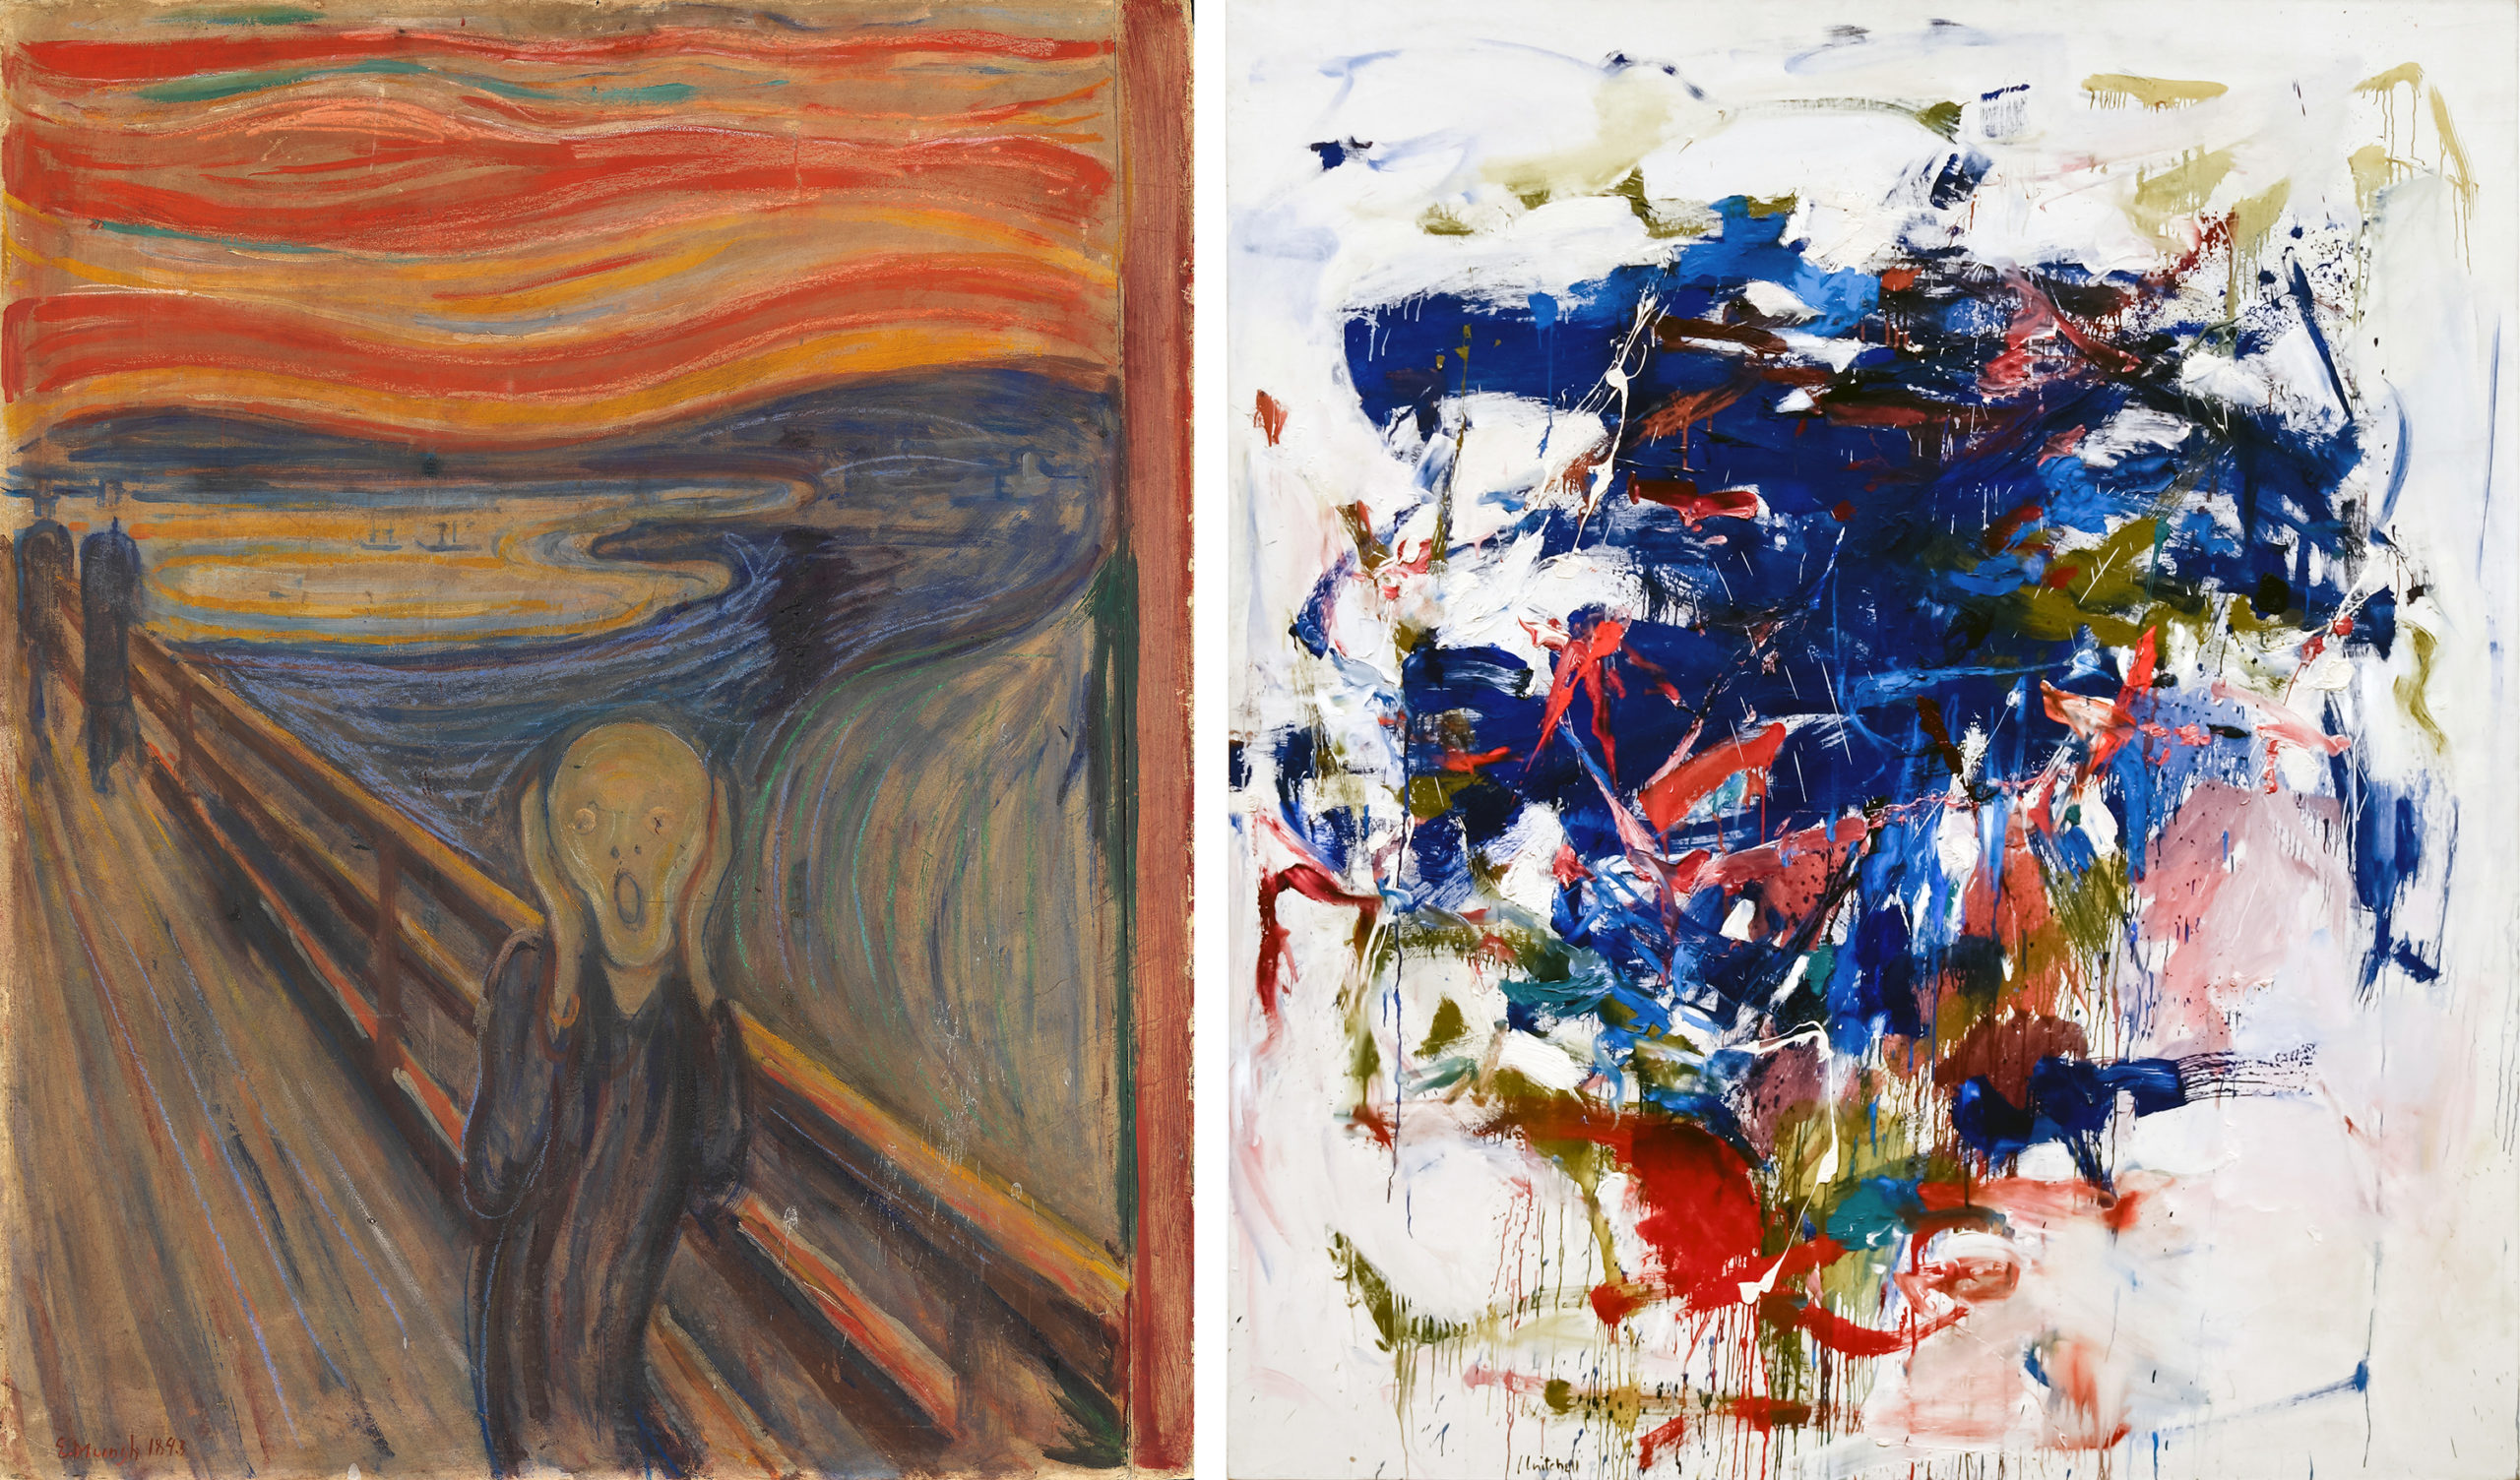 Left: Edvard Munch, The Scream, 1910, tempera on board, 66 x 83 cm (The Munch Museum, Oslo); Right: Joan Mitchell, Rock Bottom, 1960-61, oil on canvas, 198.1 x 172.7 cm (Blanton Museum, Austin, TX)